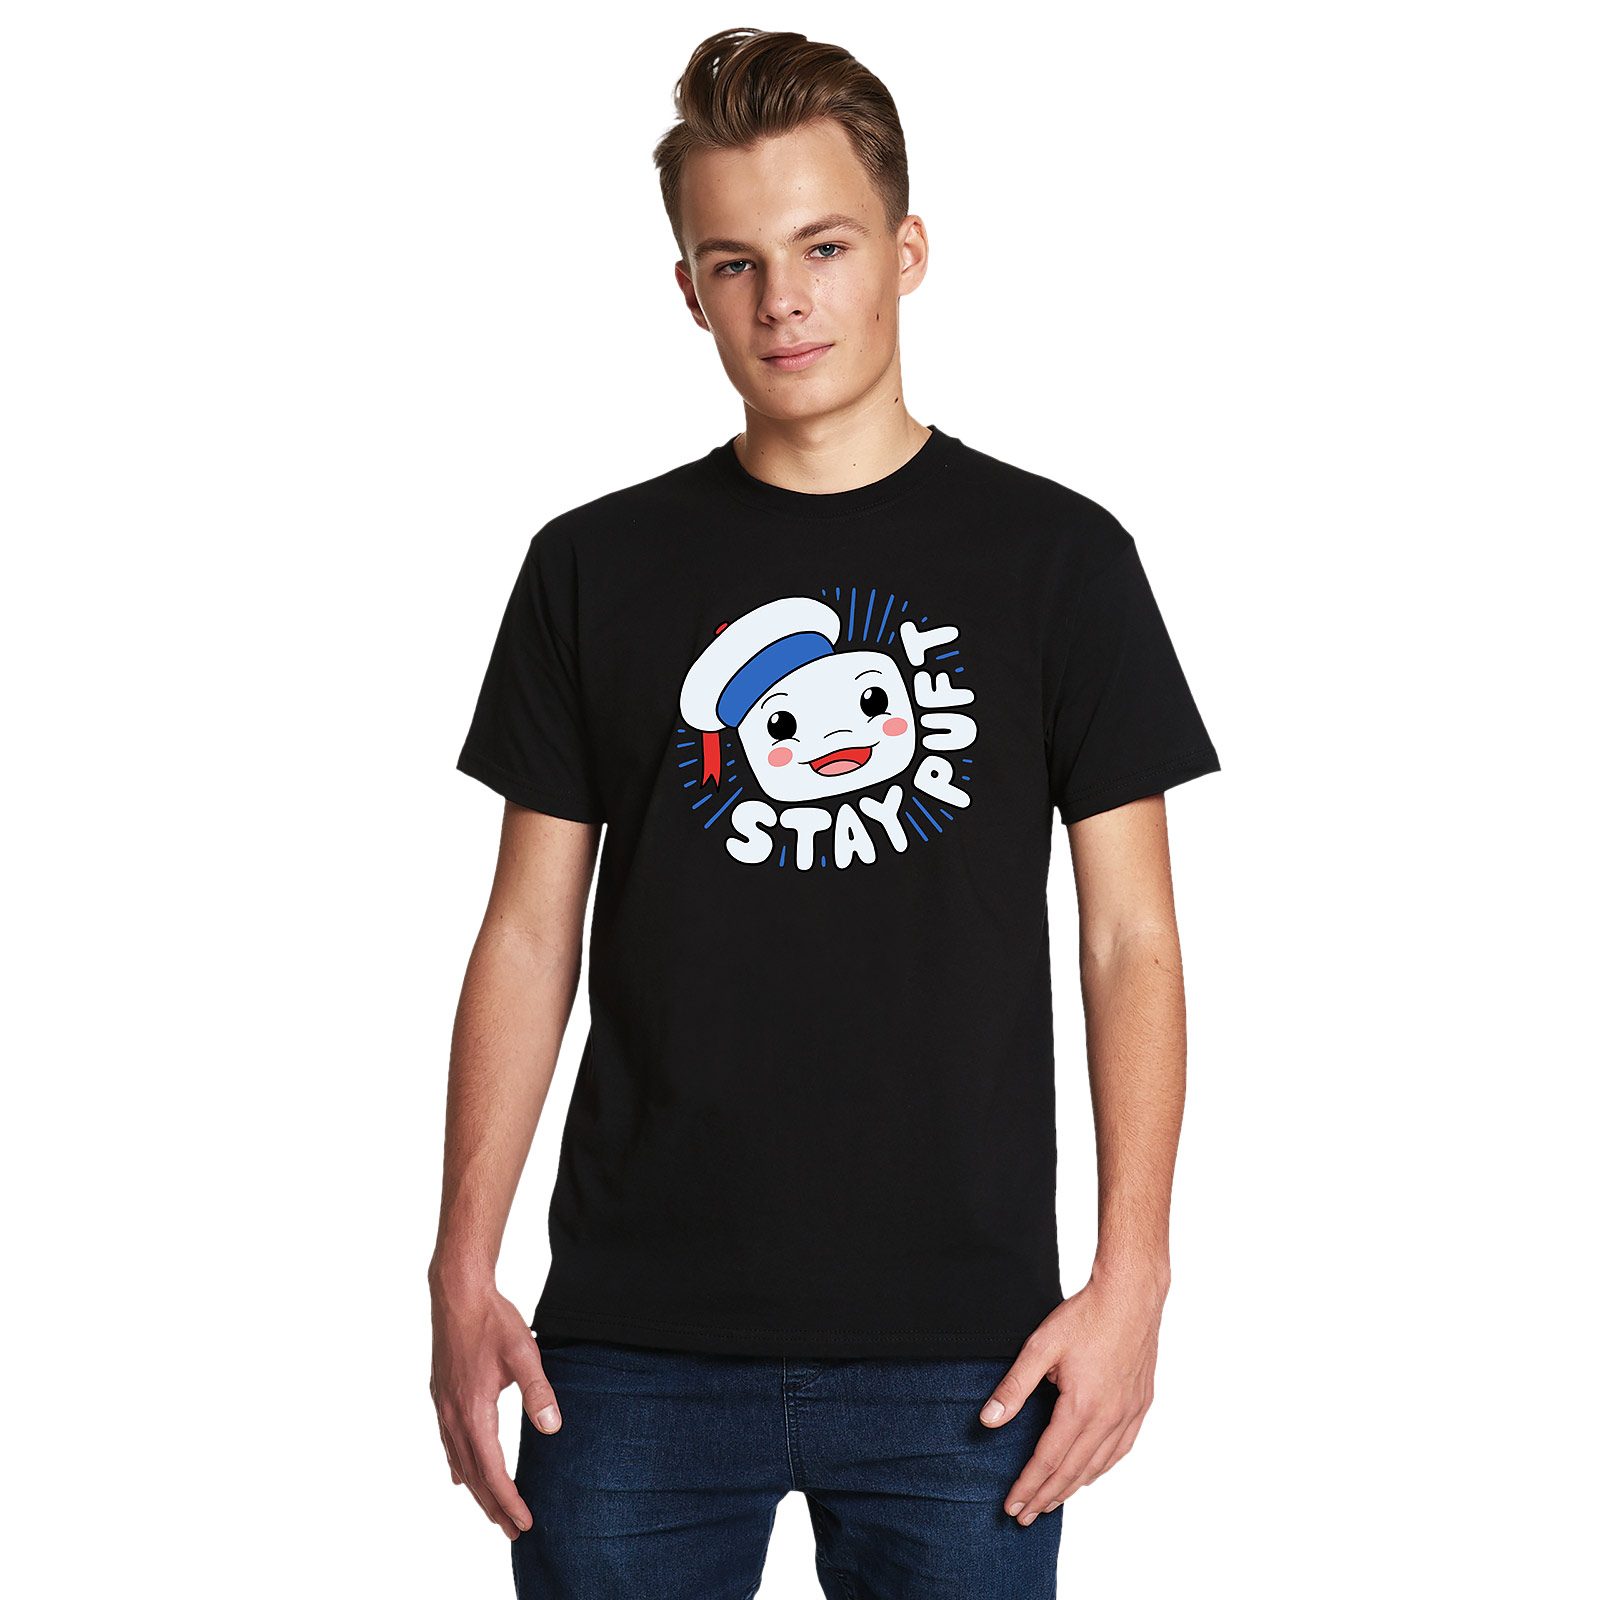 Chibi Marshmallow Man T-Shirt für Ghostbusters Fans